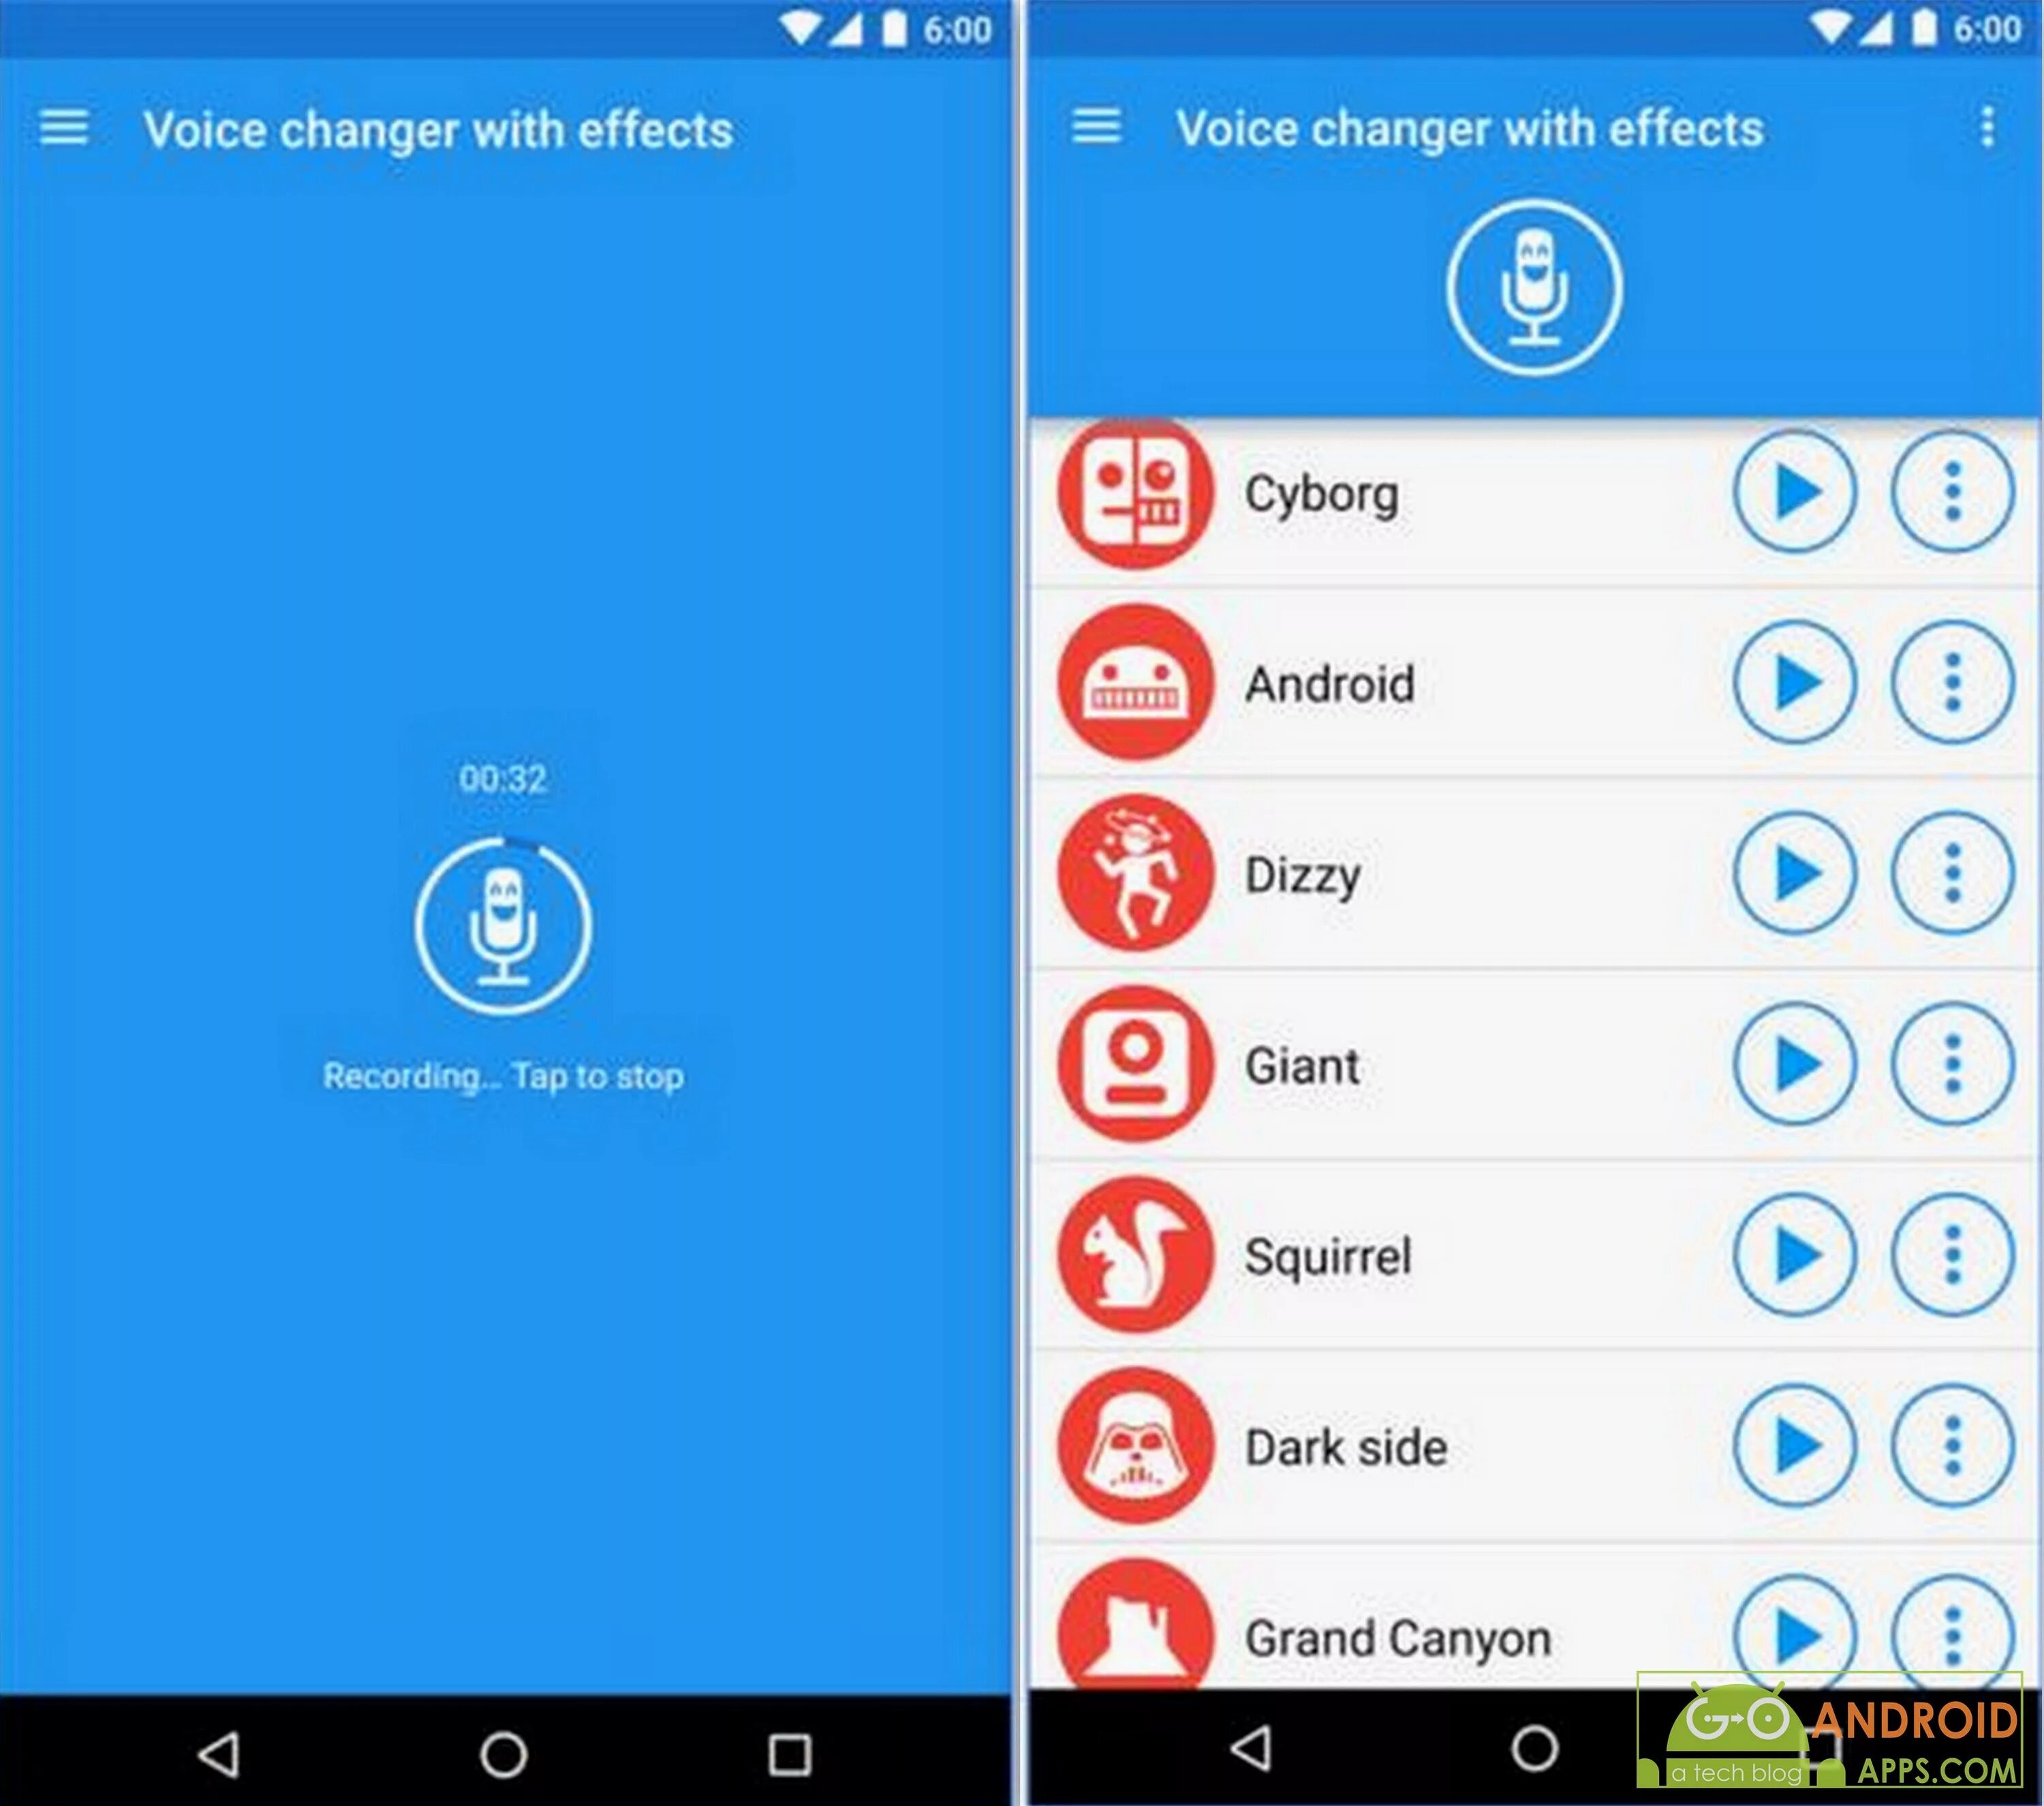 Voice changer demo. Приложение Voice Changer для андроид. Voice Changer with Effects. Voice Changer с эффектами. Преобразователь голоса с эффектами.